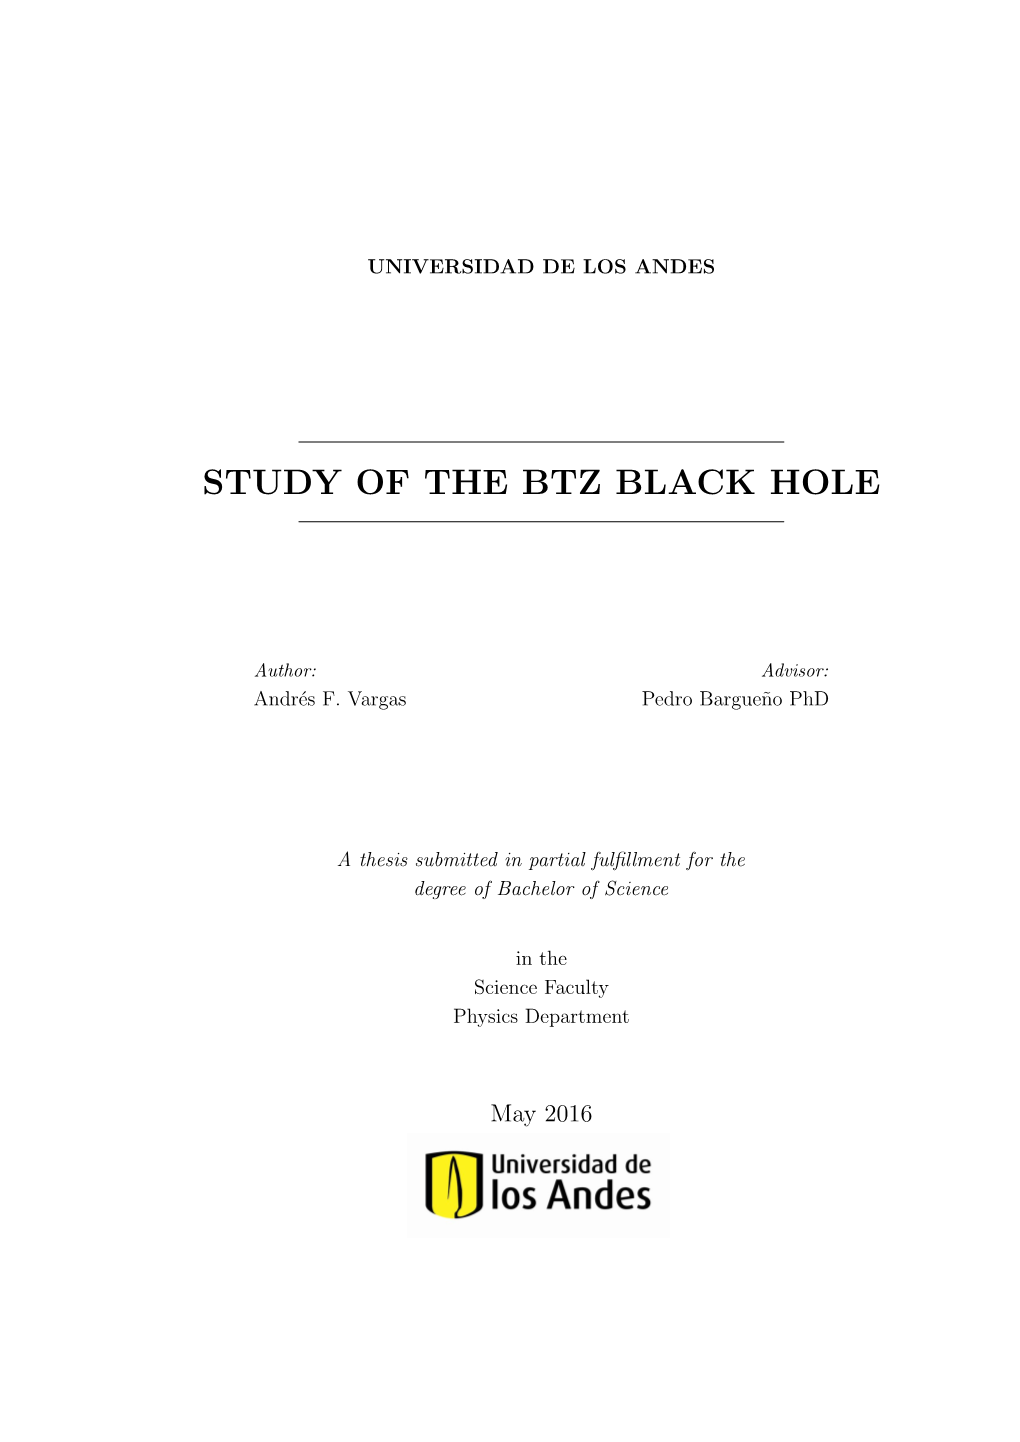 Study of the Btz Black Hole